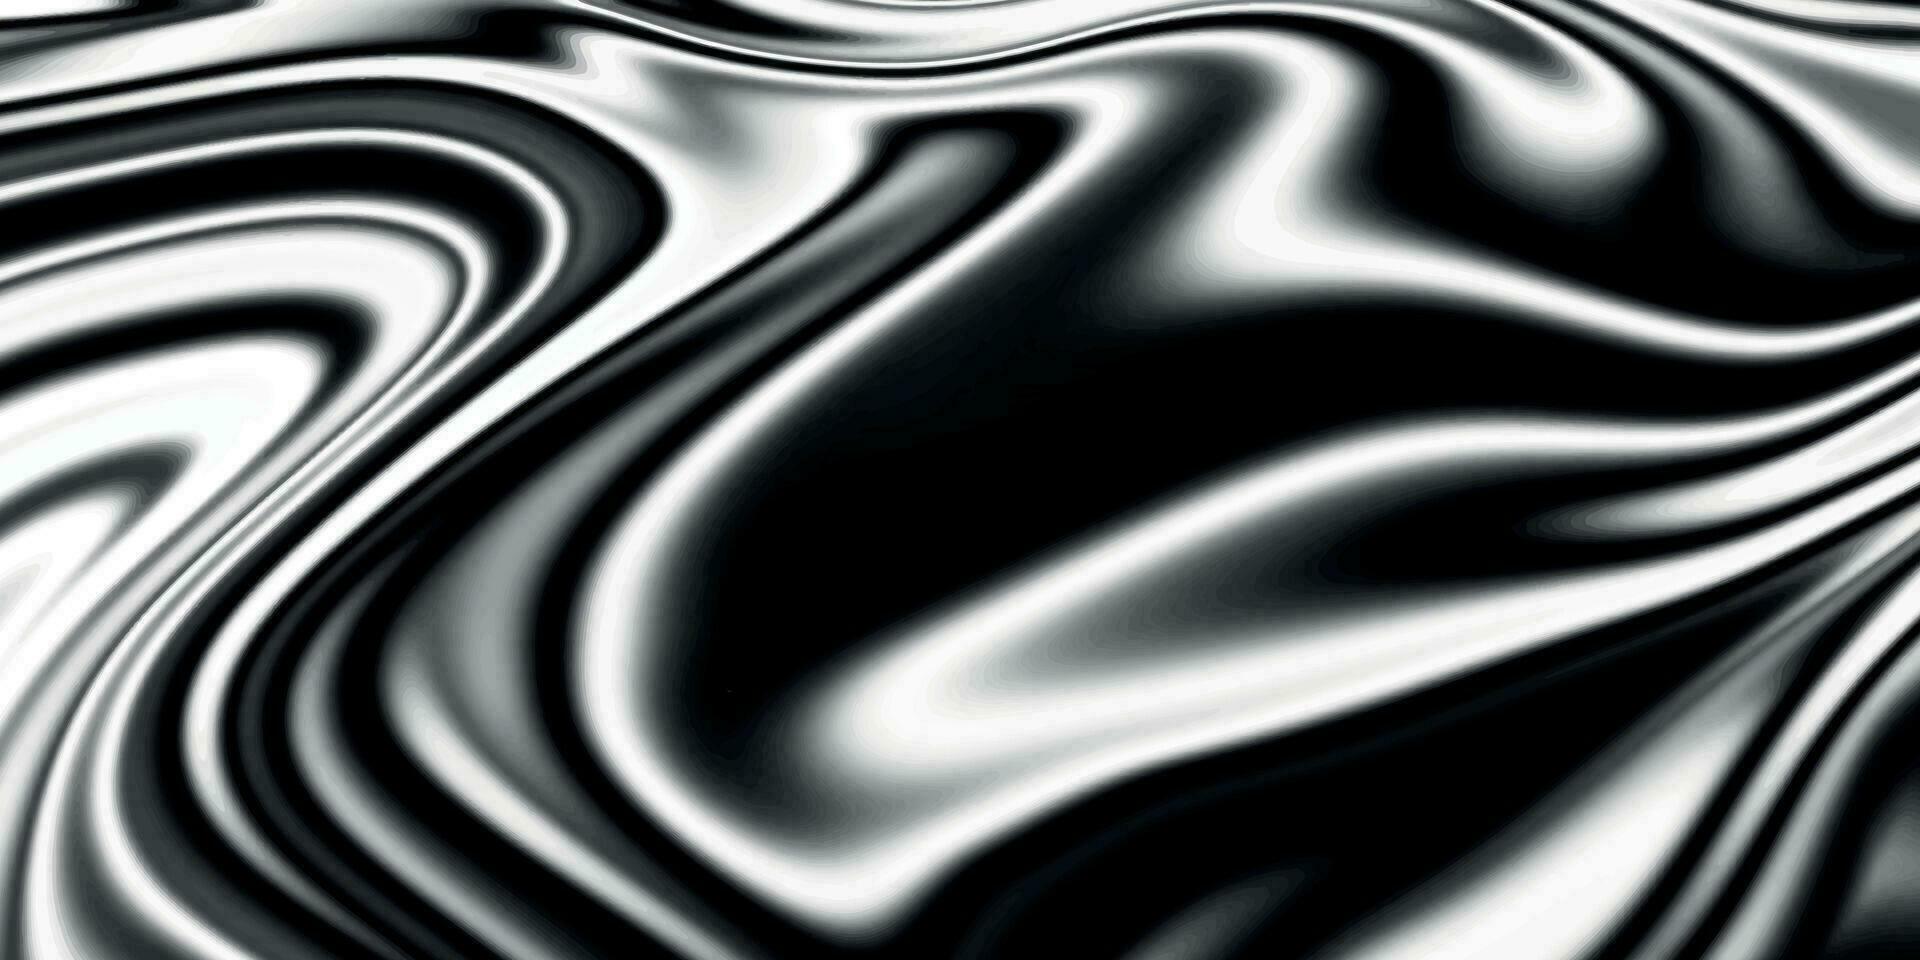 vloeistof abstract achtergrond. glanzend vloeistof acryl verf textuur. zilver chroom metaal structuur met golven. vloeistof zilver metalen golvend elegant. modern meetkundig vloeibaar maken achtergrond. vloeistof marmeren structuur vector